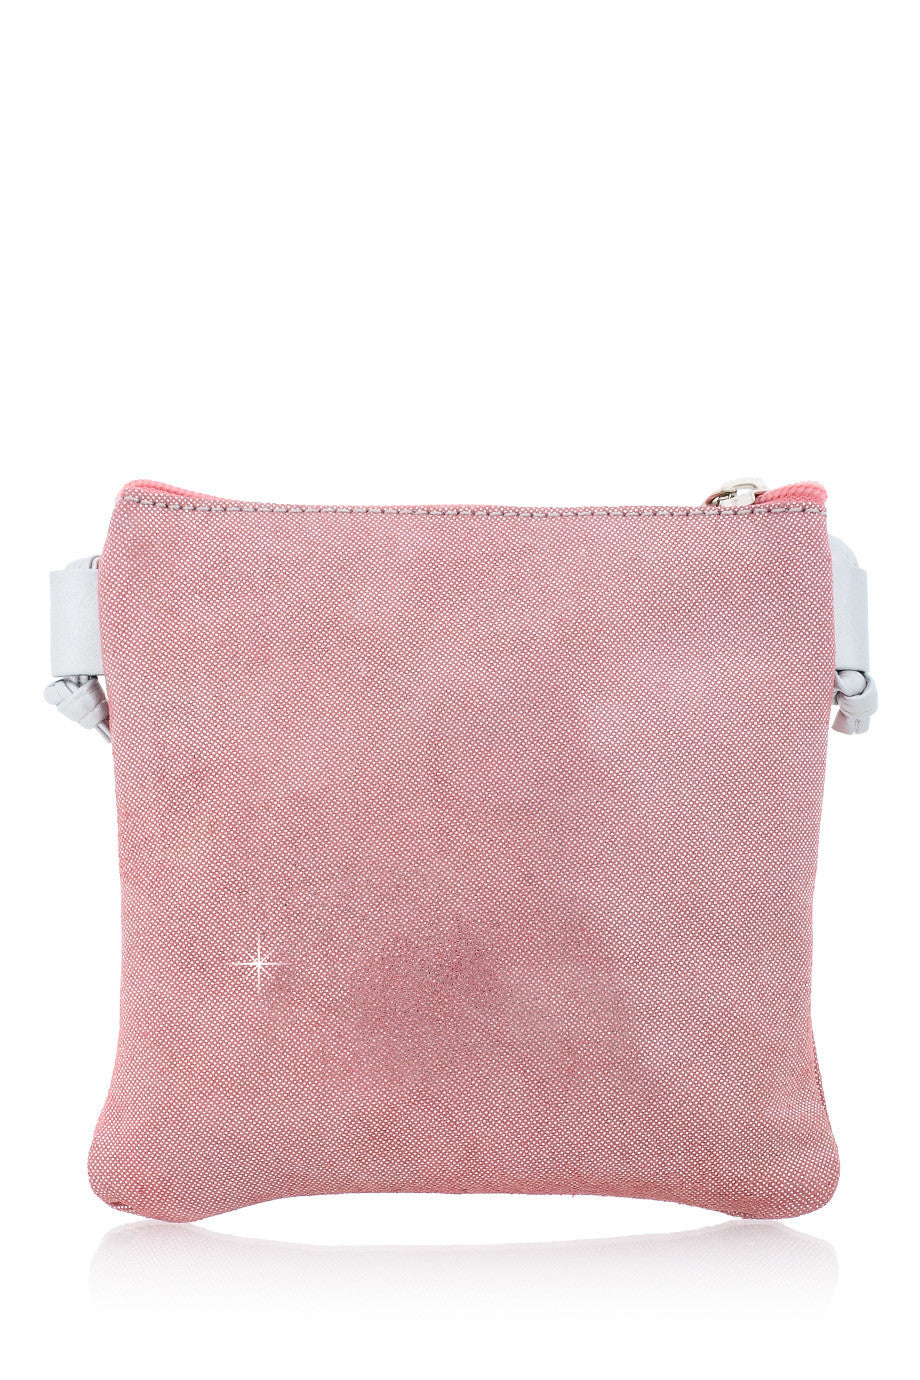 MINI MADELINE metallic roze portemonnee